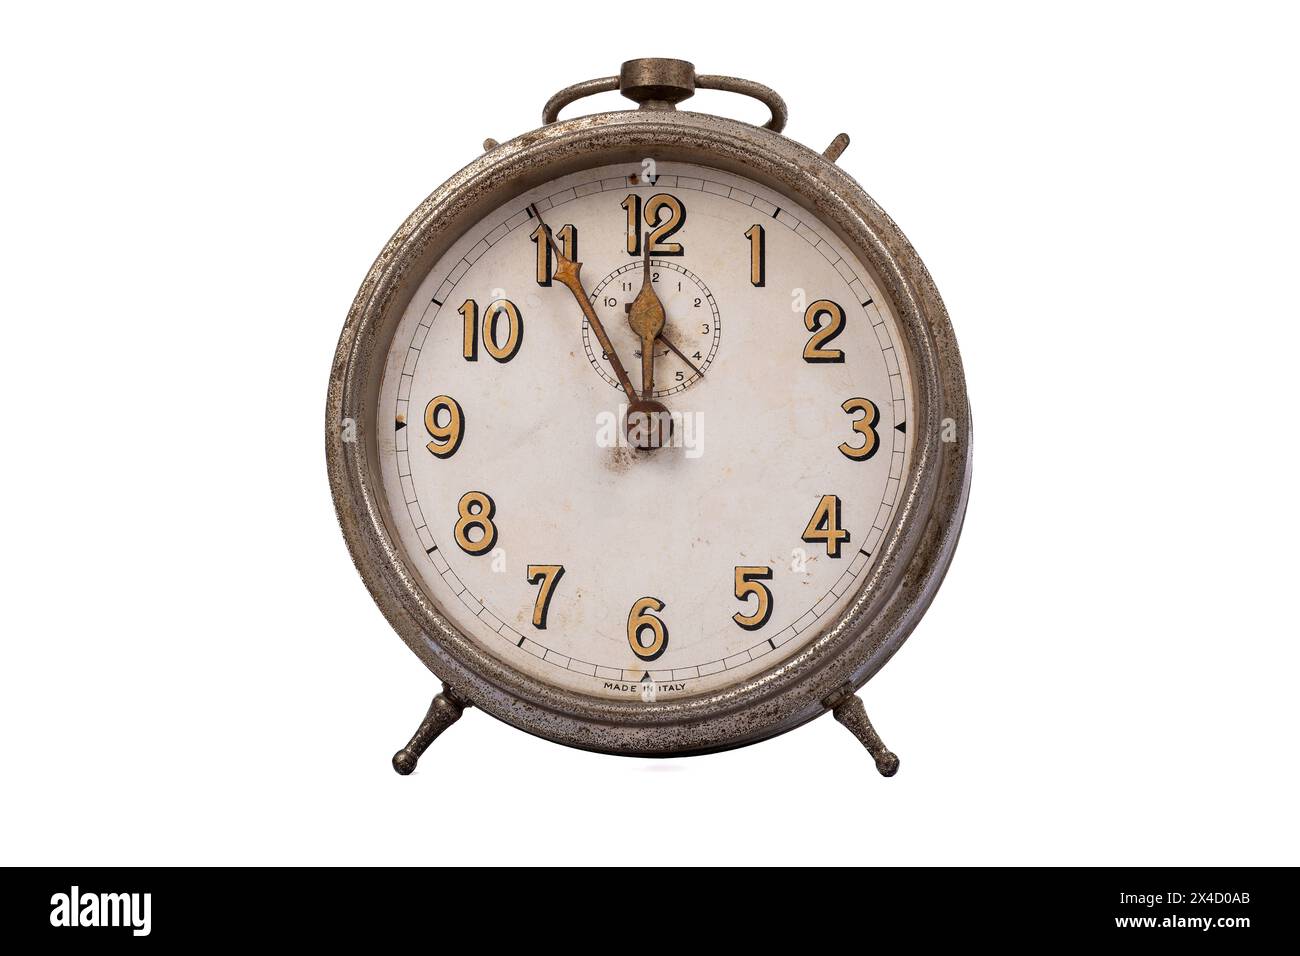 1930s Vintage Veglia Alarm Clock from Italy, Set to 5 to 12 on White Background Stock Photo